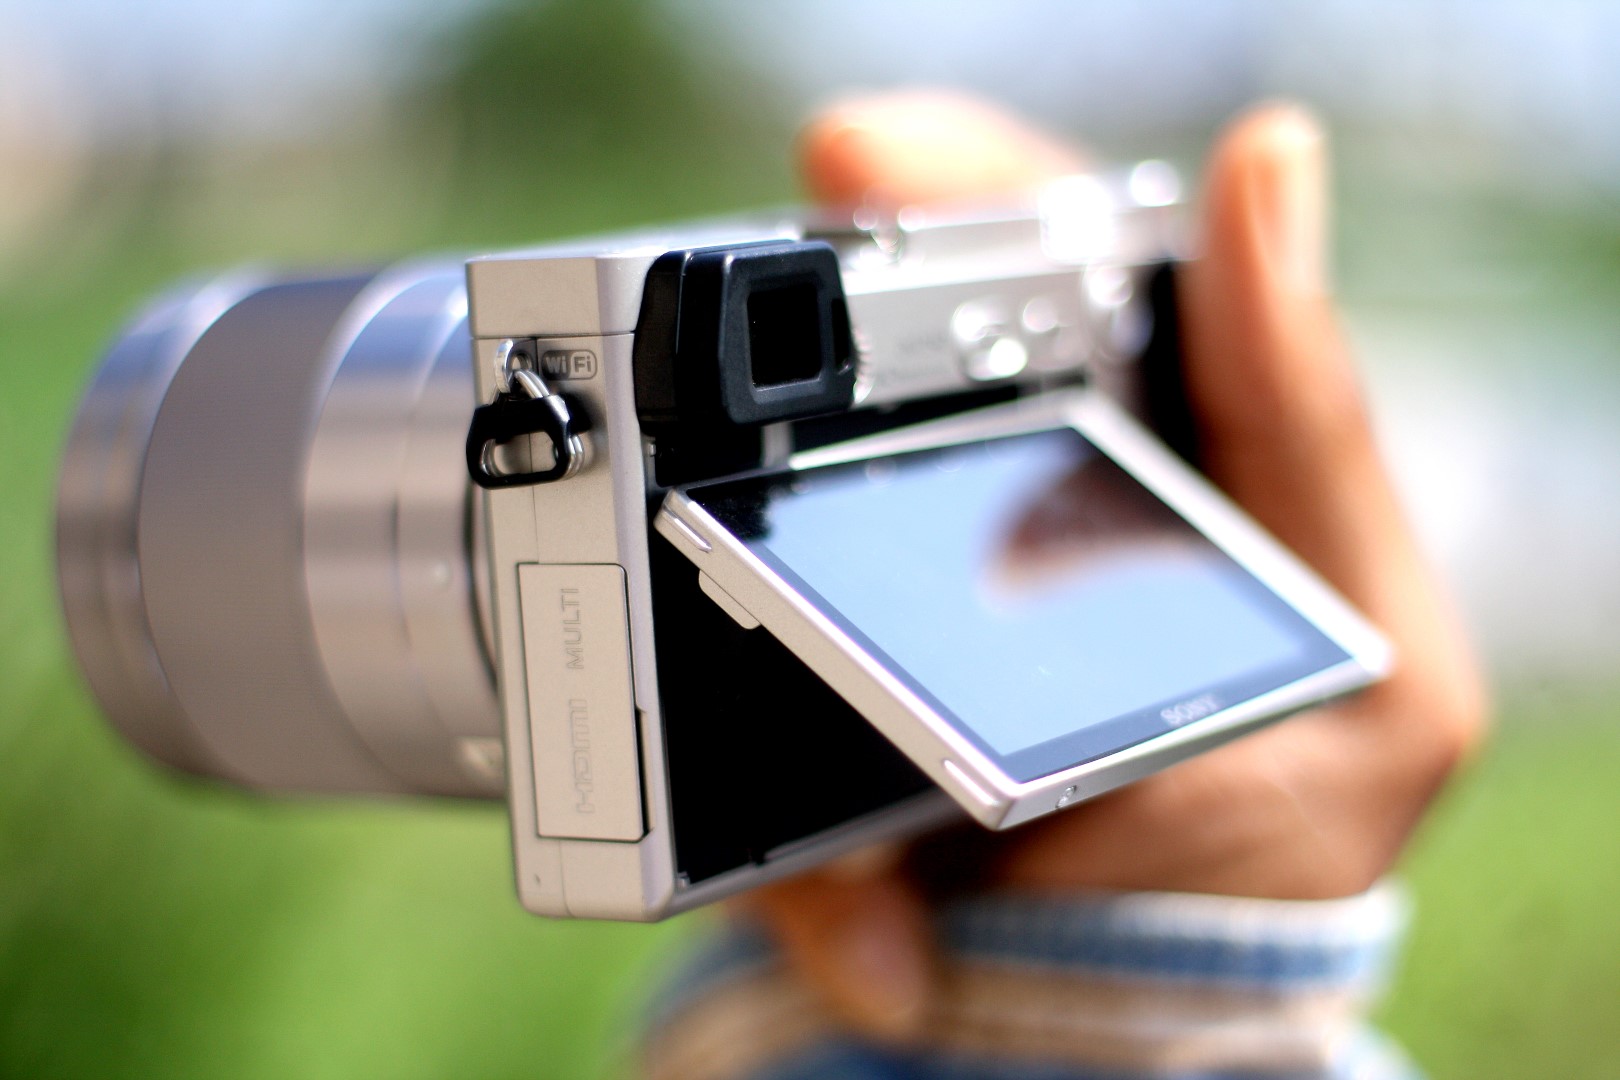 sonyA6000 mirrorless cameras for bloggers